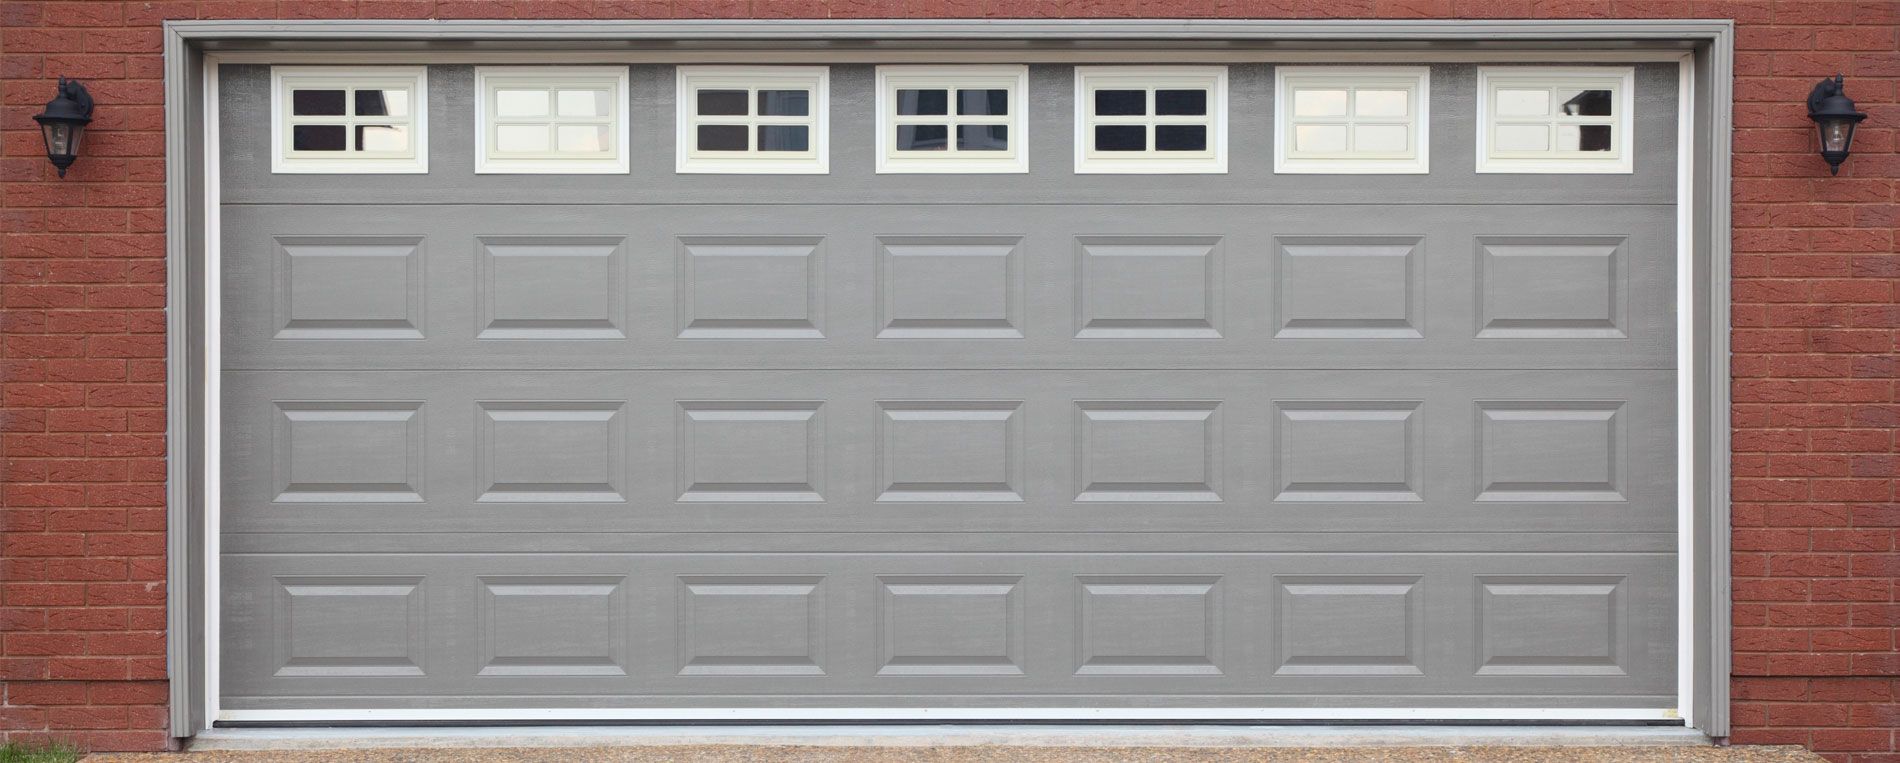 Troutdale Garage Doors